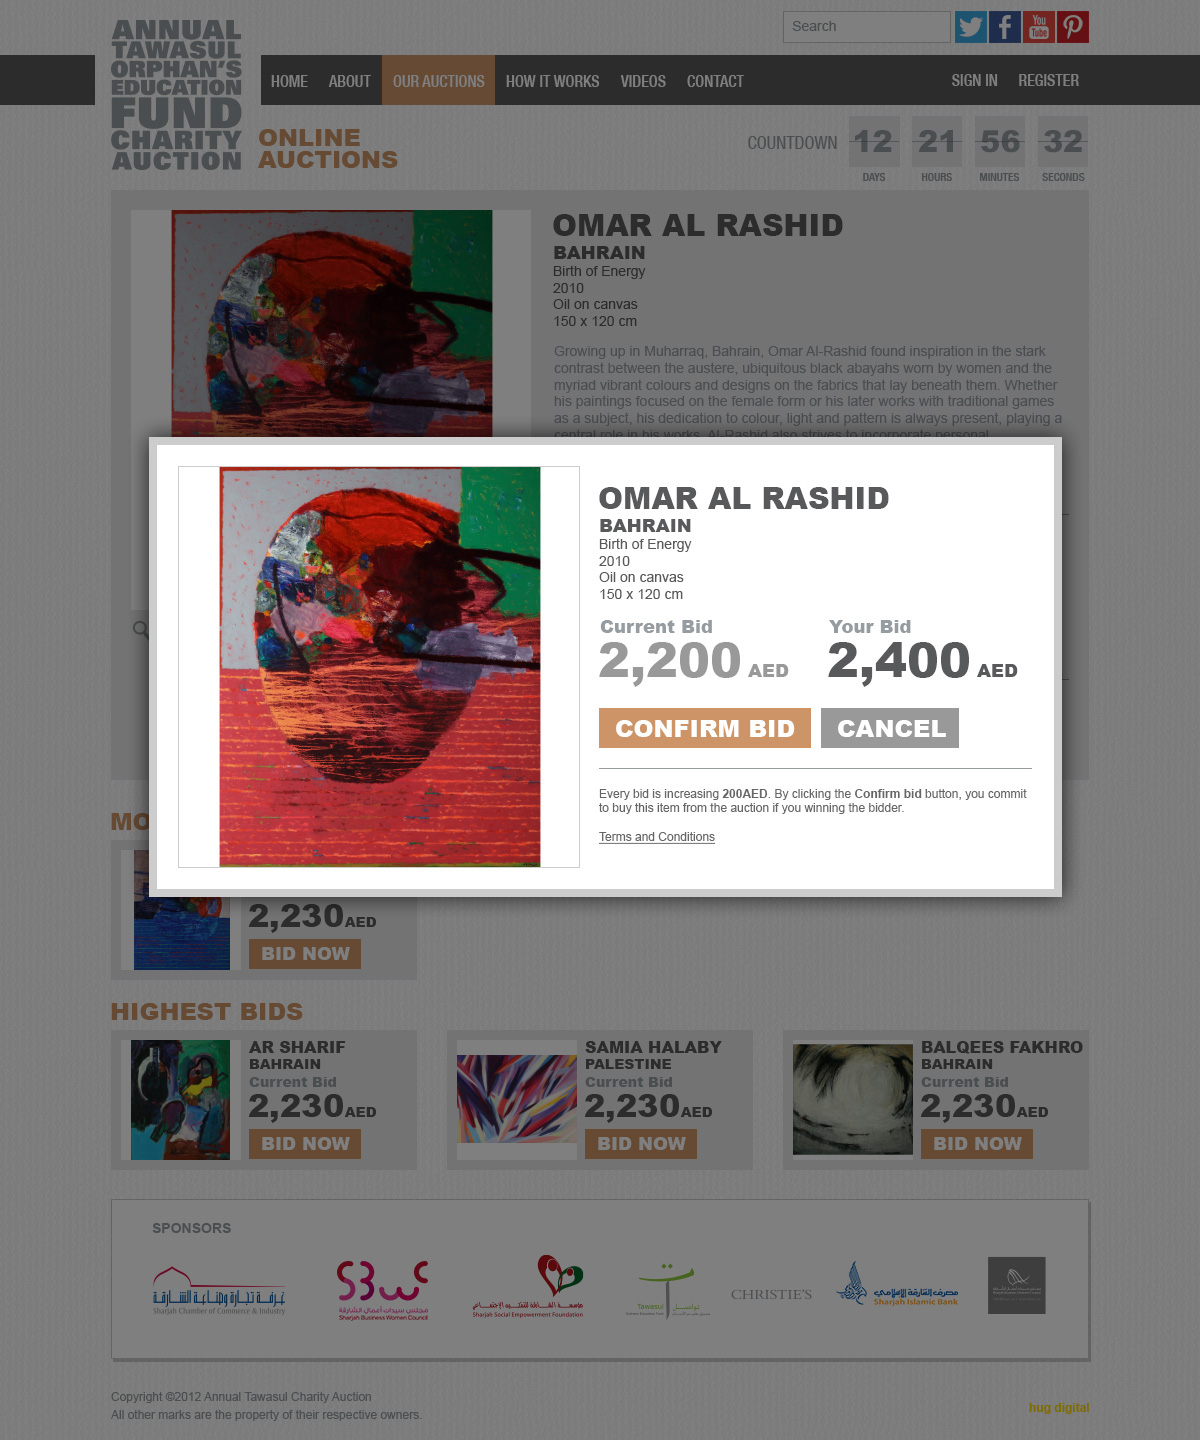 Tawasul auction Website online Bidding omair imomair hugdigital dubai UAE